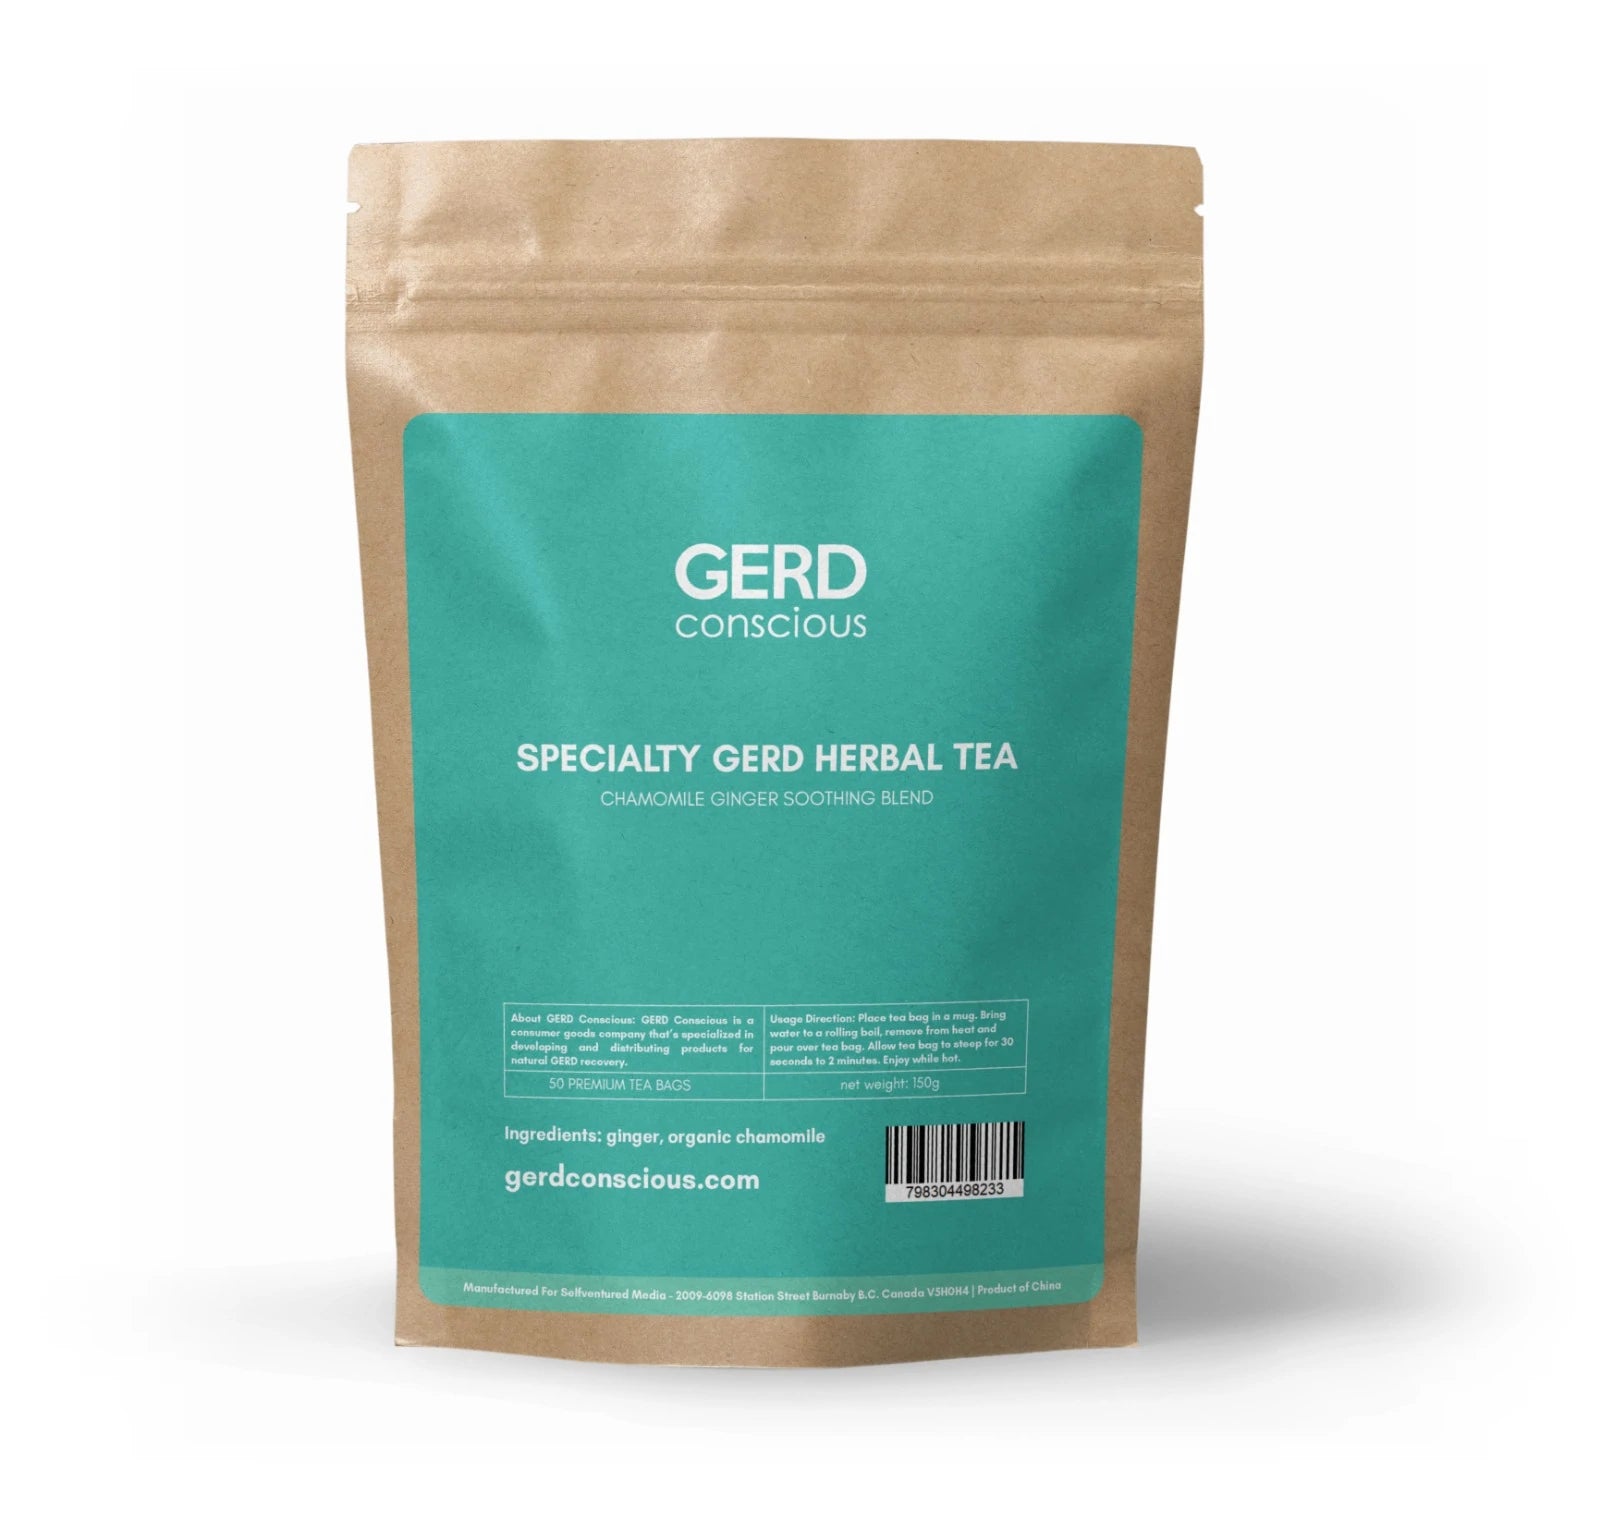 2 packs of GERD Conscious Tea - The Everyday blend